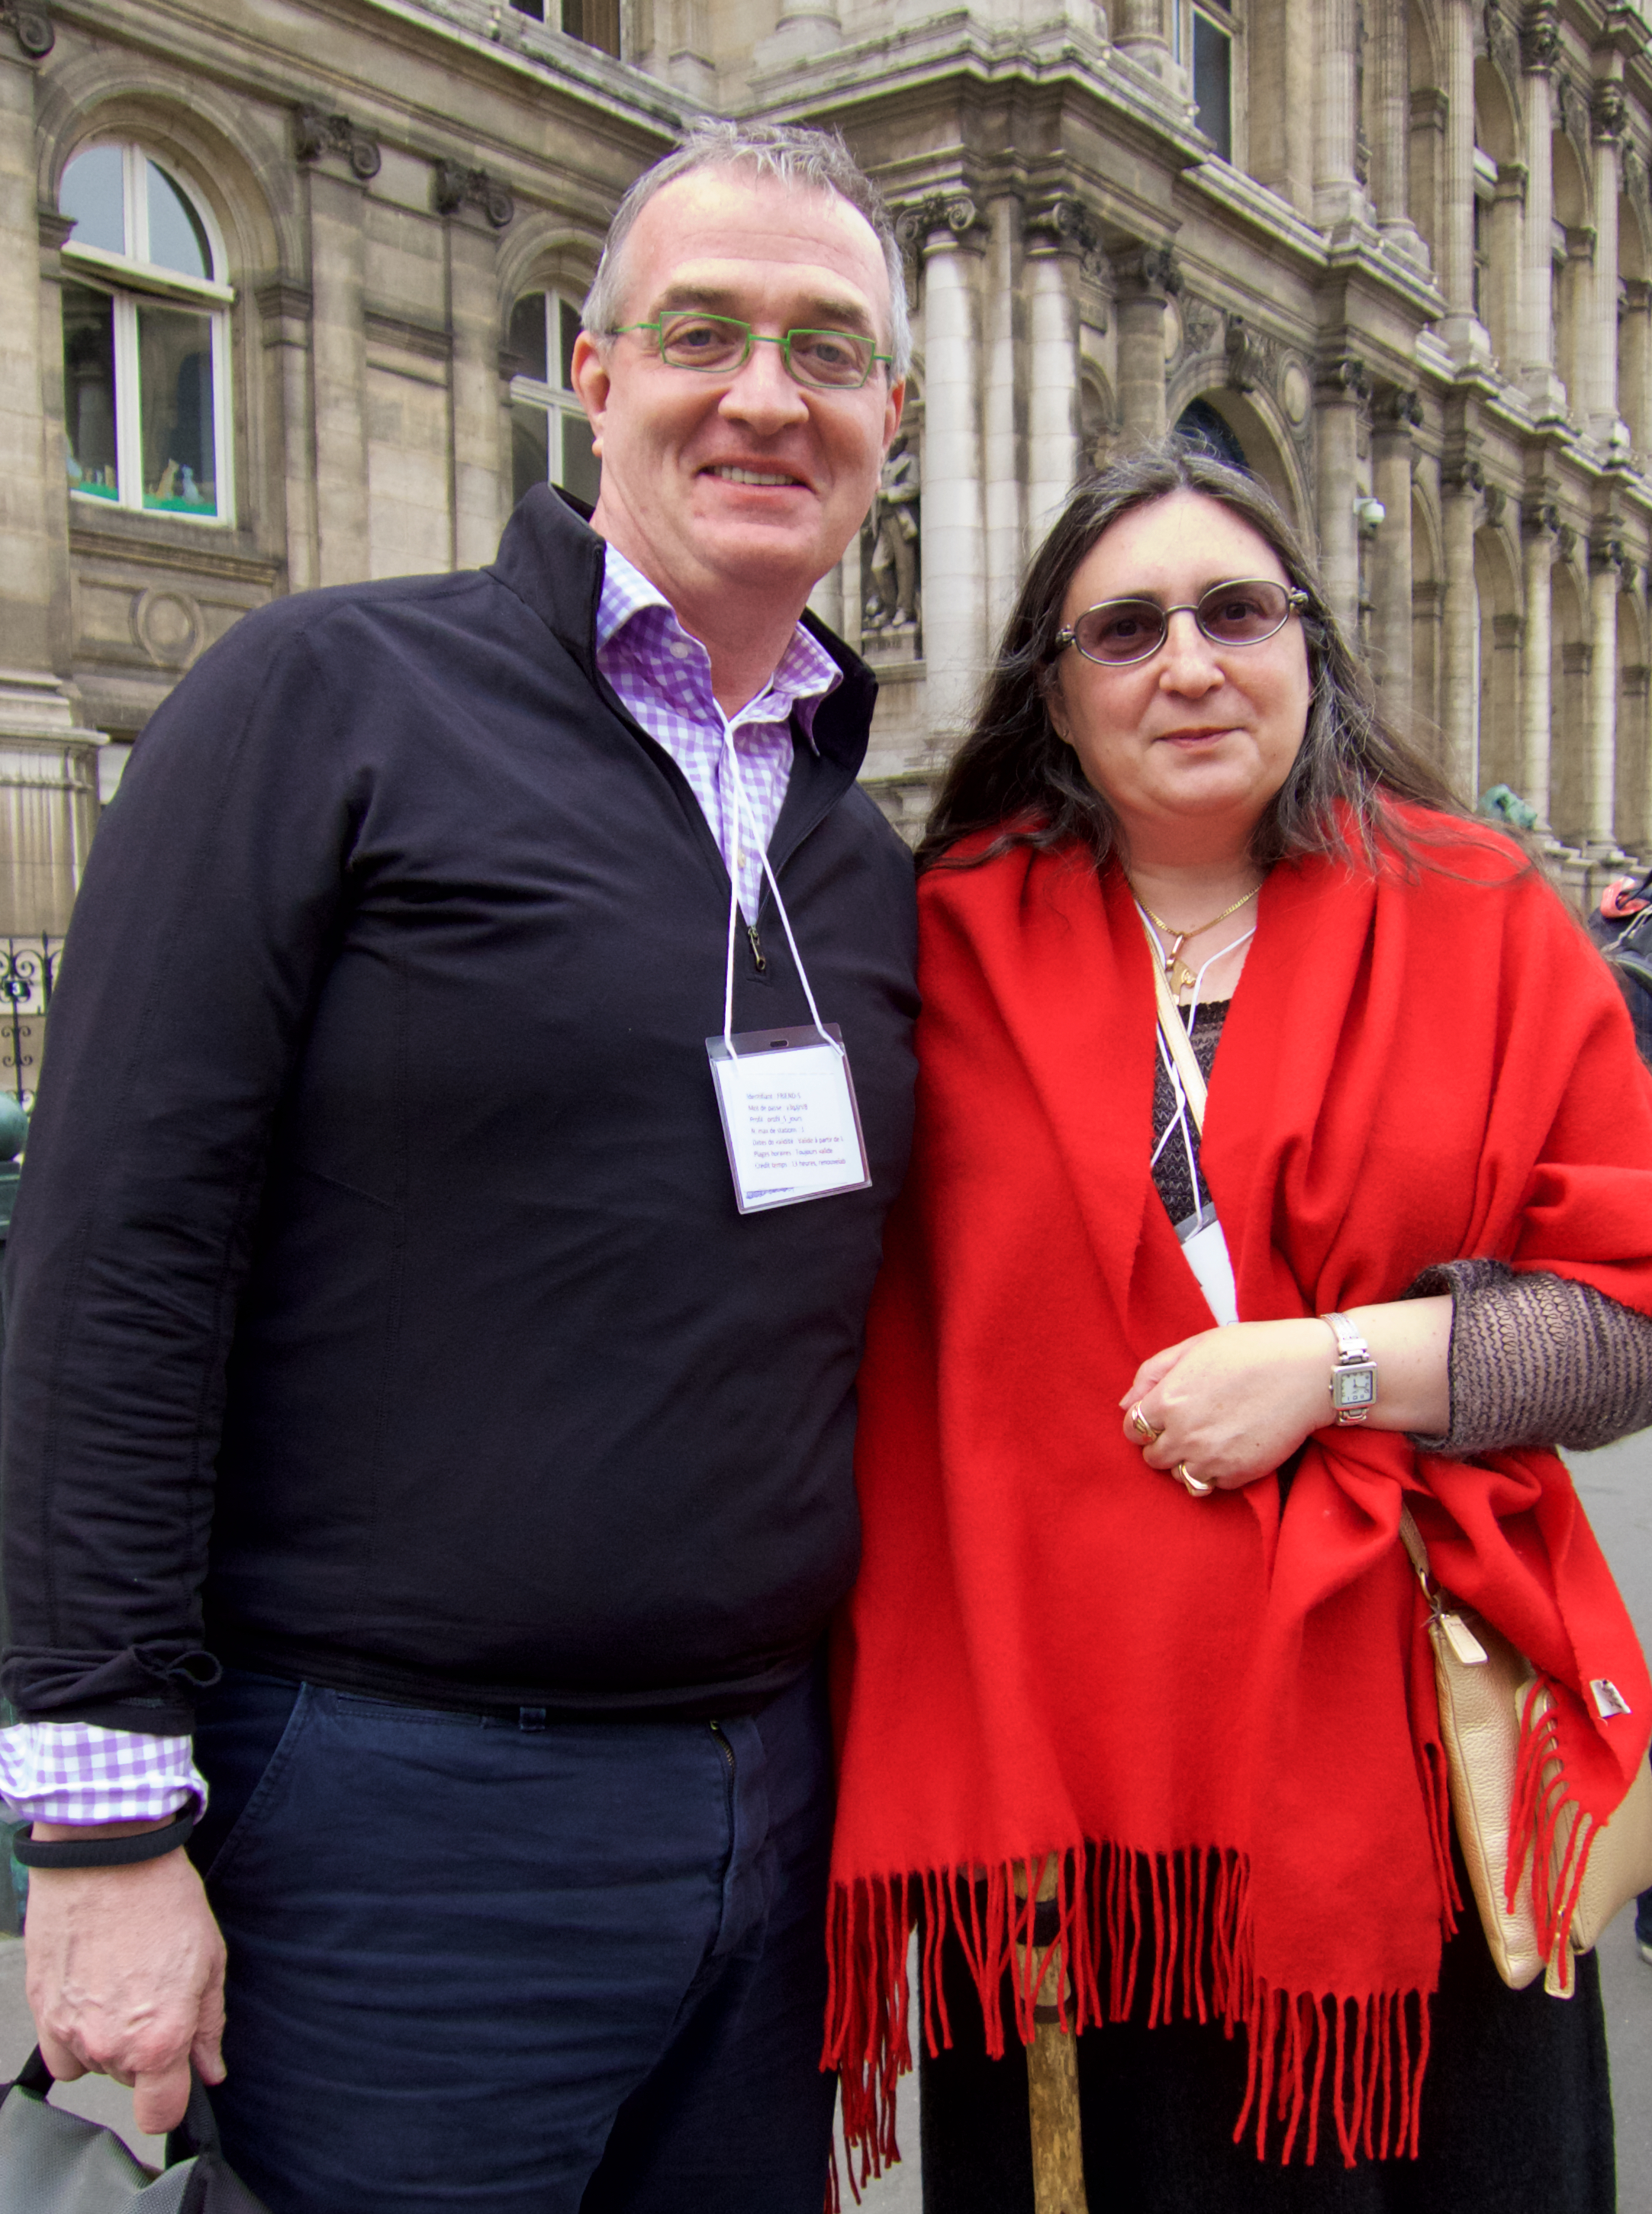 Stephen Friend and Olga Werby outside the Hôtel de Ville at the Paris Sage Assembly, April 17, 2015.